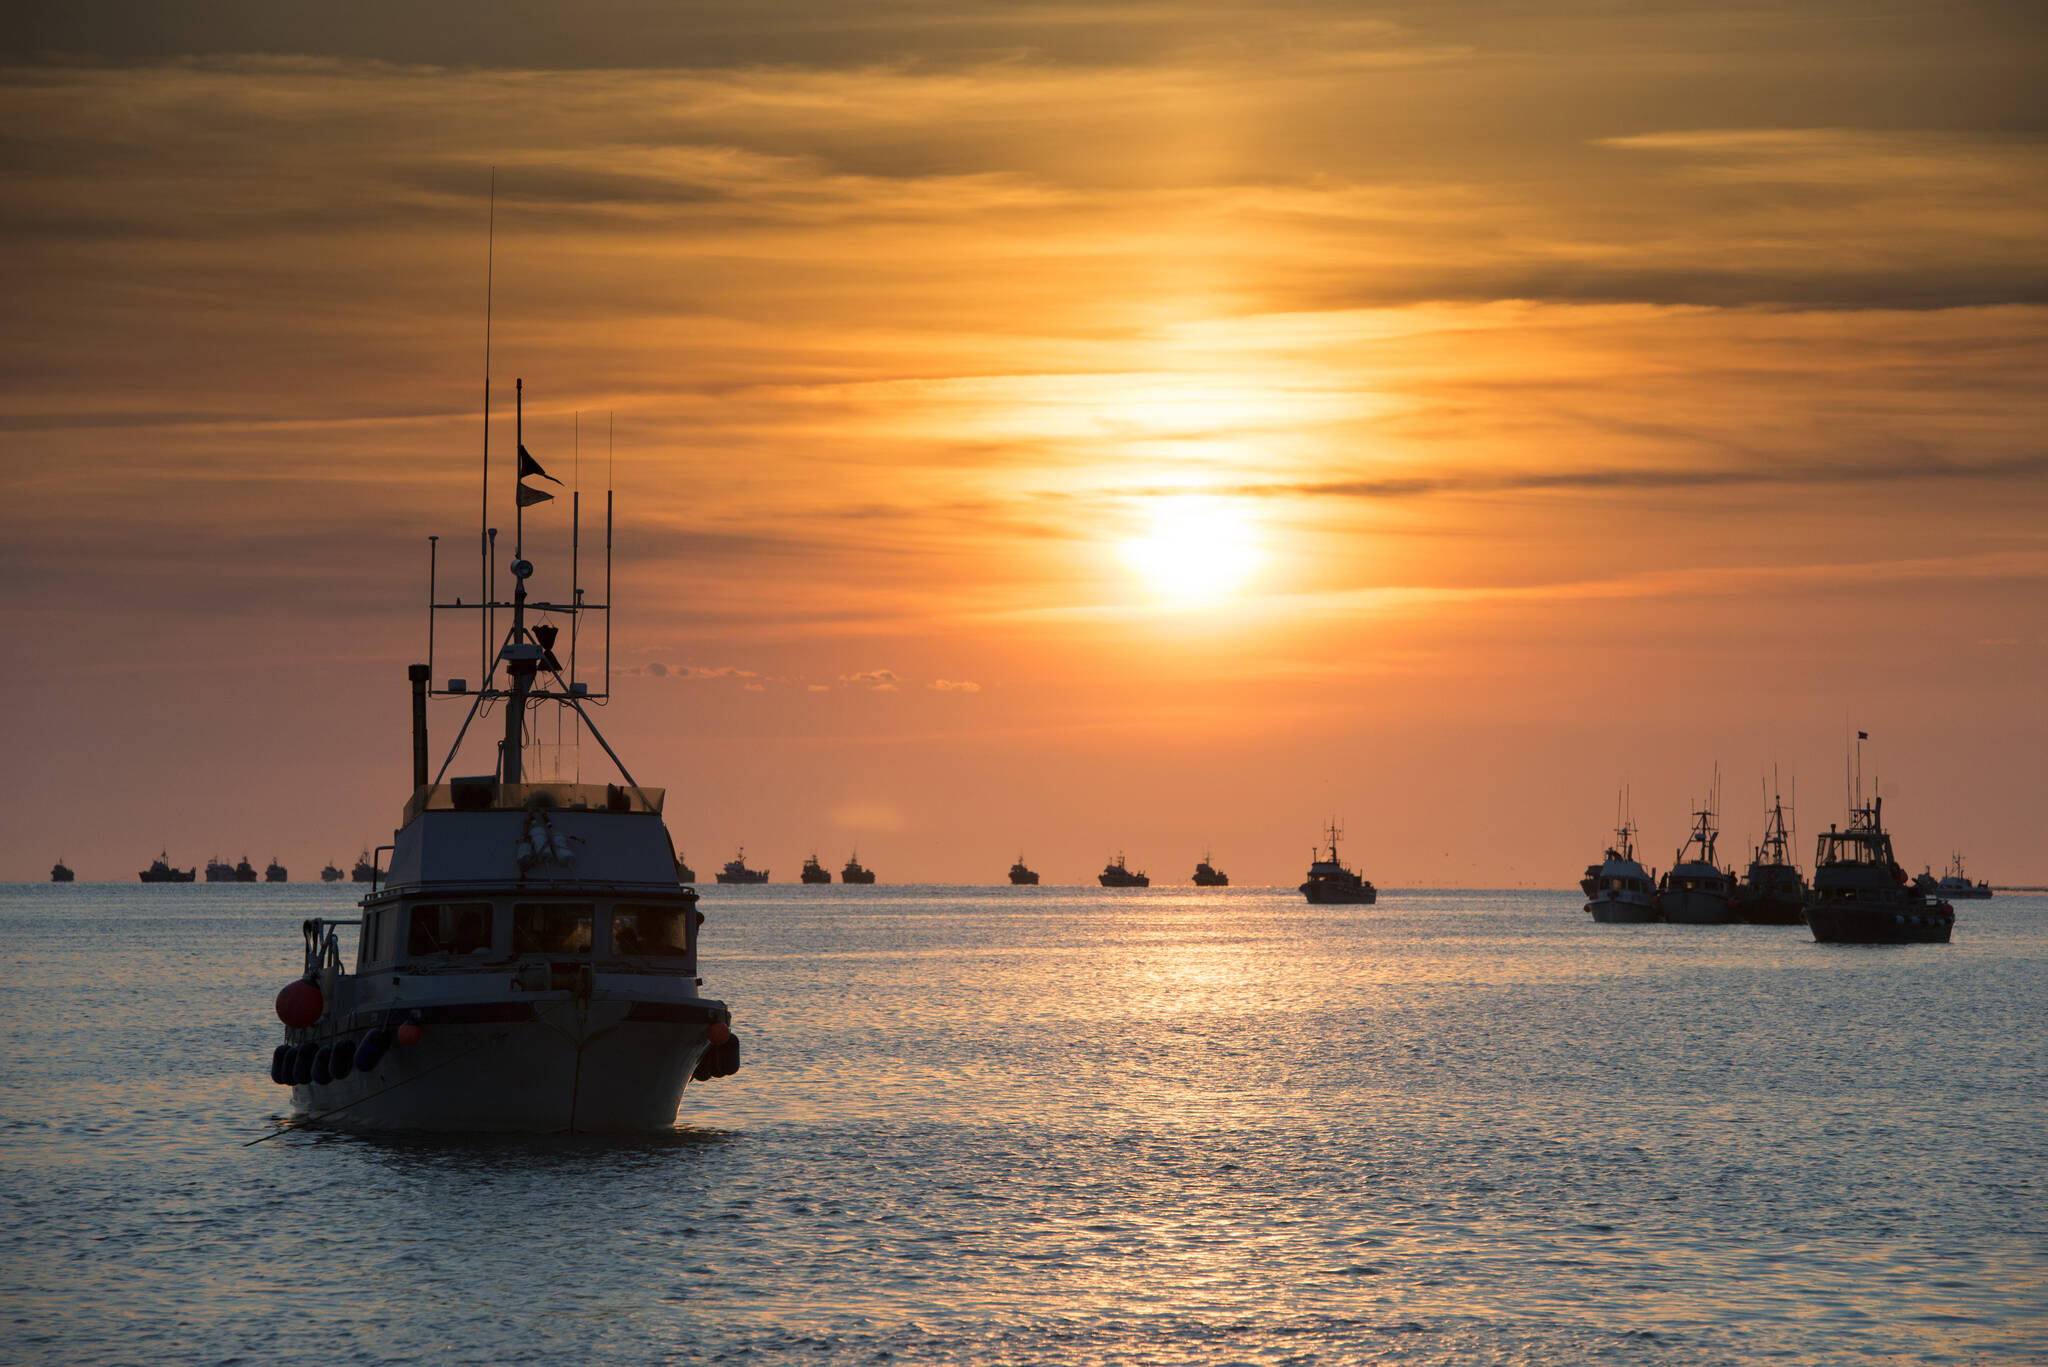 Bristol Bay Fisheries Report: July 1, 2021